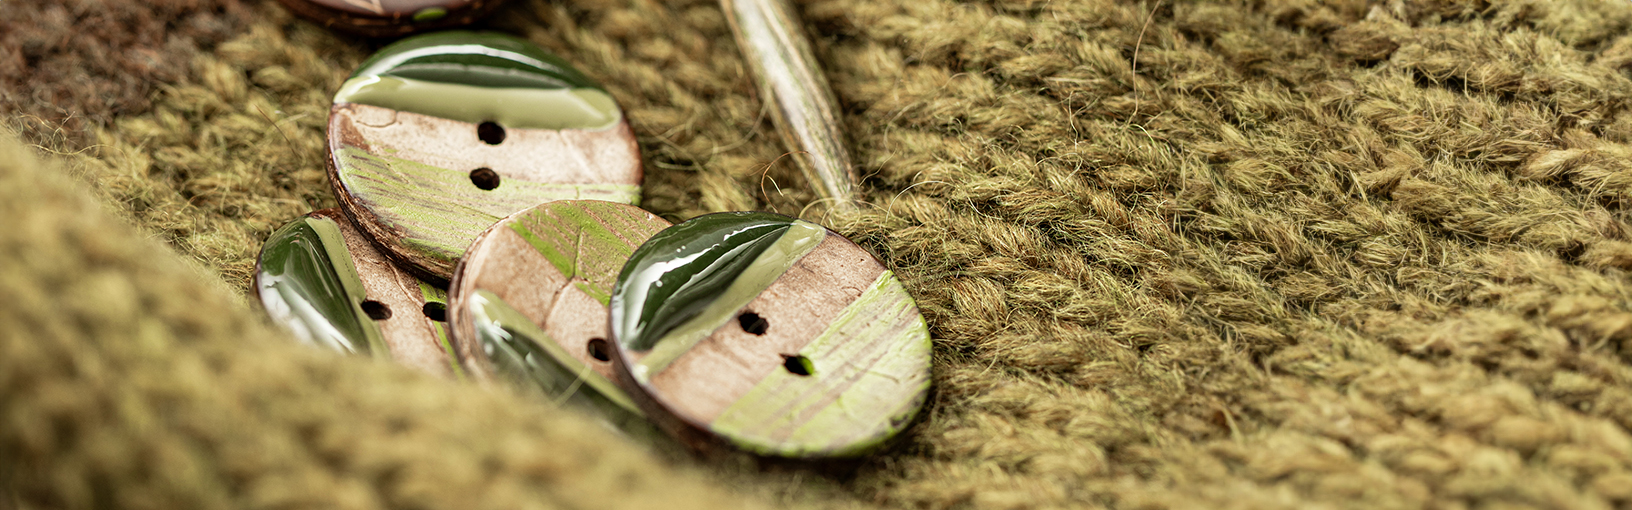 INNOVATIVE, ERGONOMIC - HIGHEST QUALITY Lana Grossa Needles | CIRCULAR KNITTING NEEDLES | Design-wood Natural